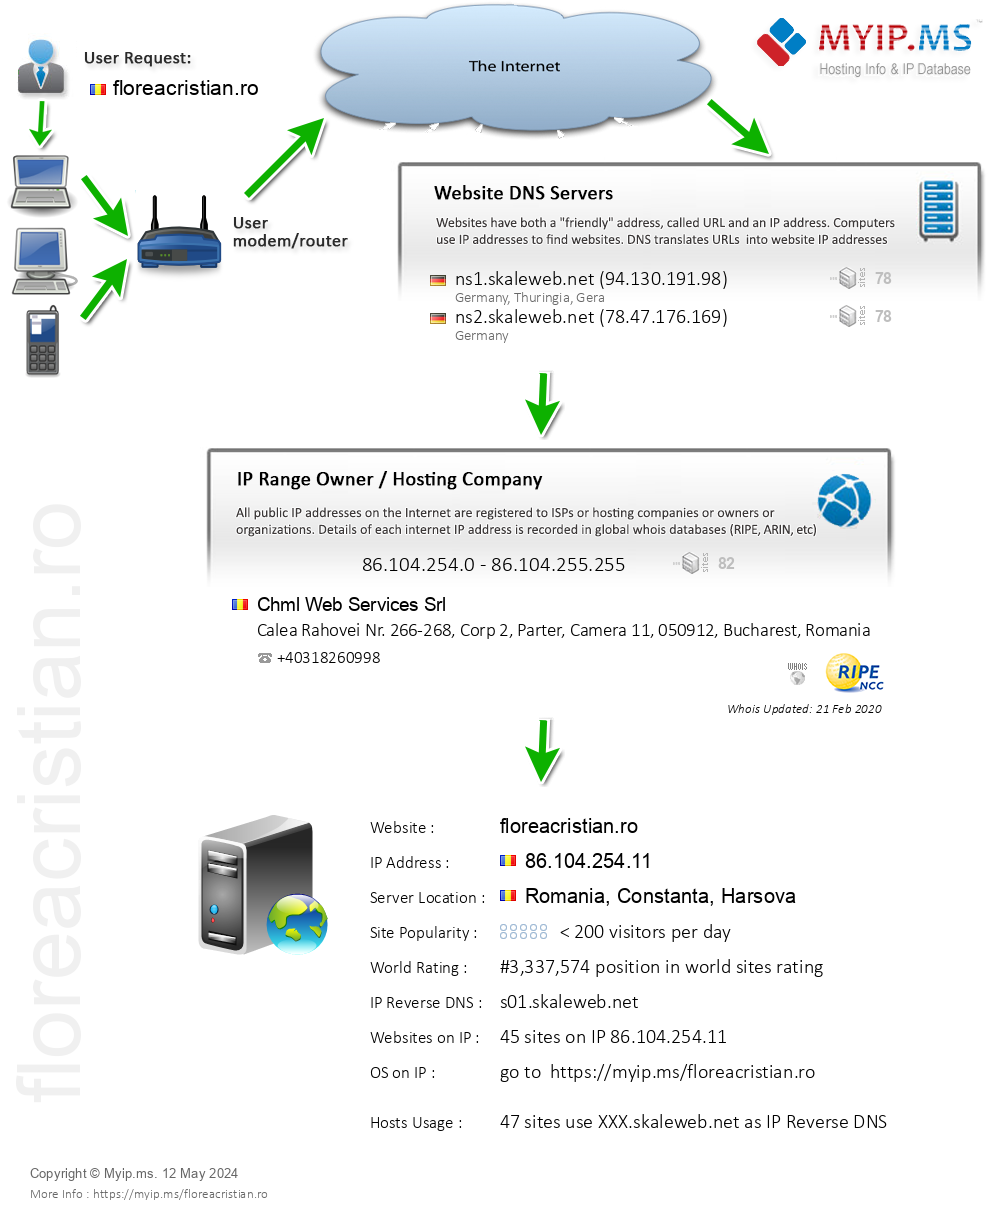 Floreacristian.ro - Website Hosting Visual IP Diagram